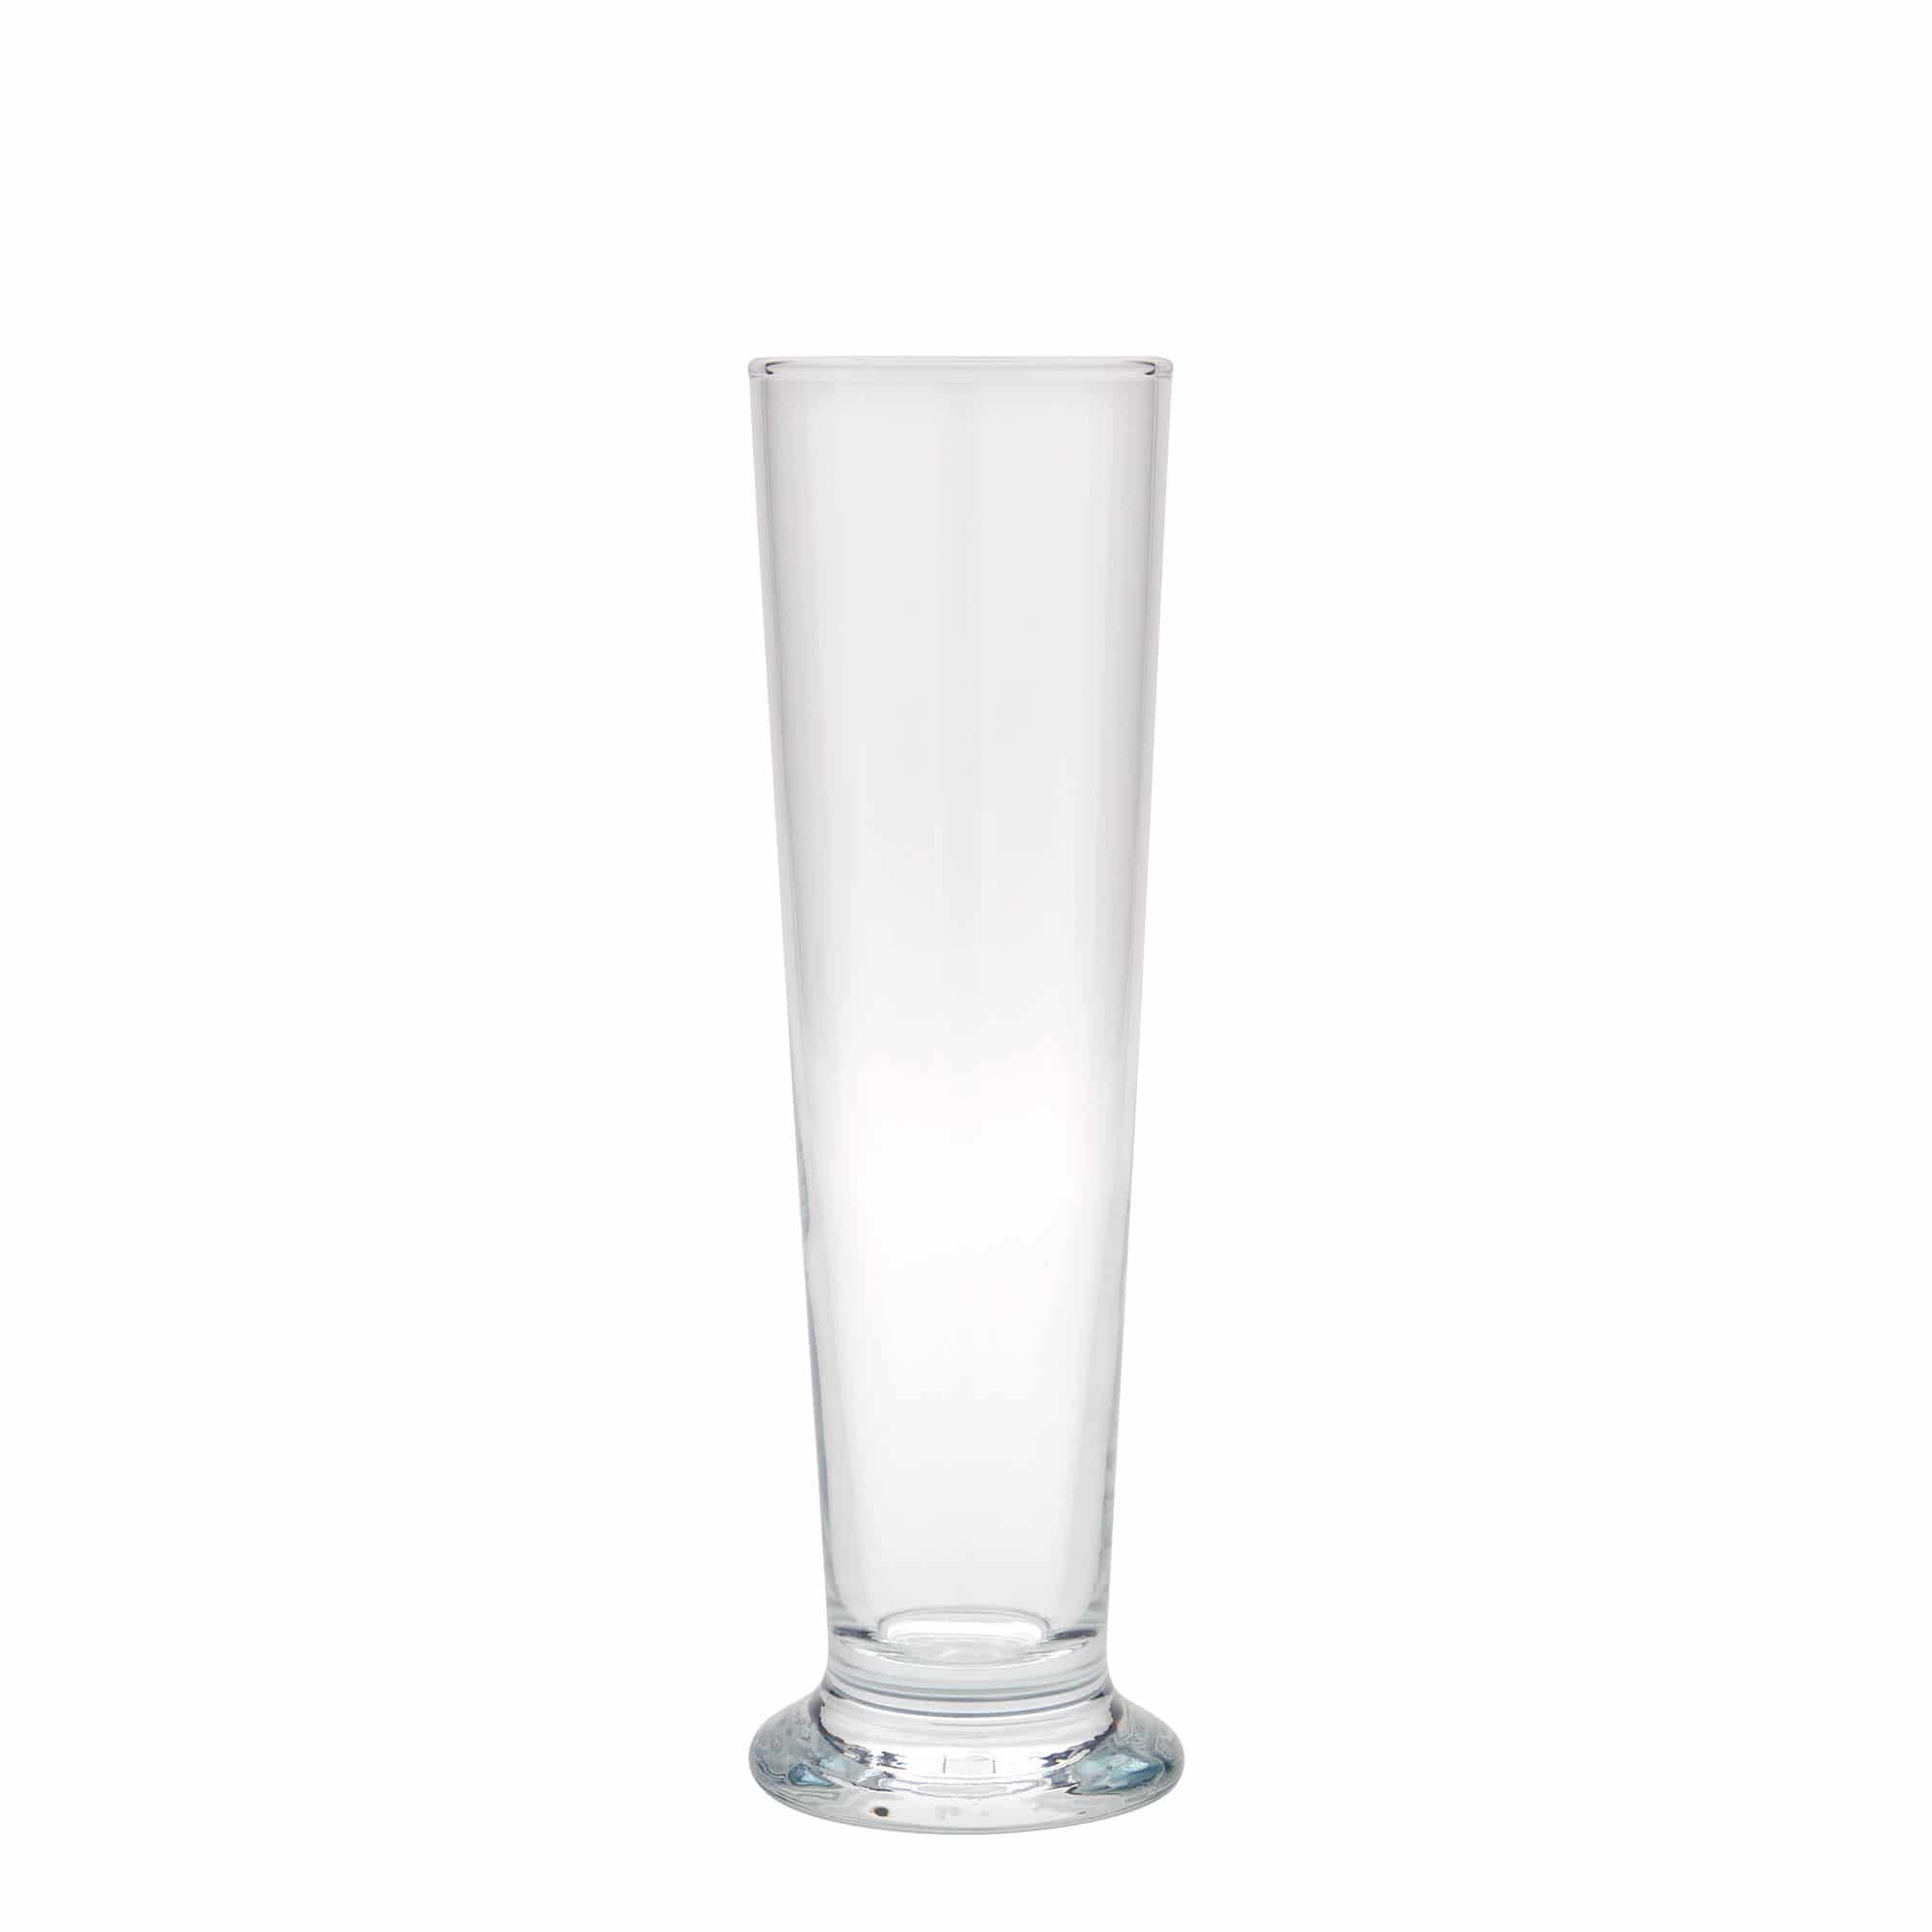 Drinkglas 'Bierstange Basic', 300 ml, glas